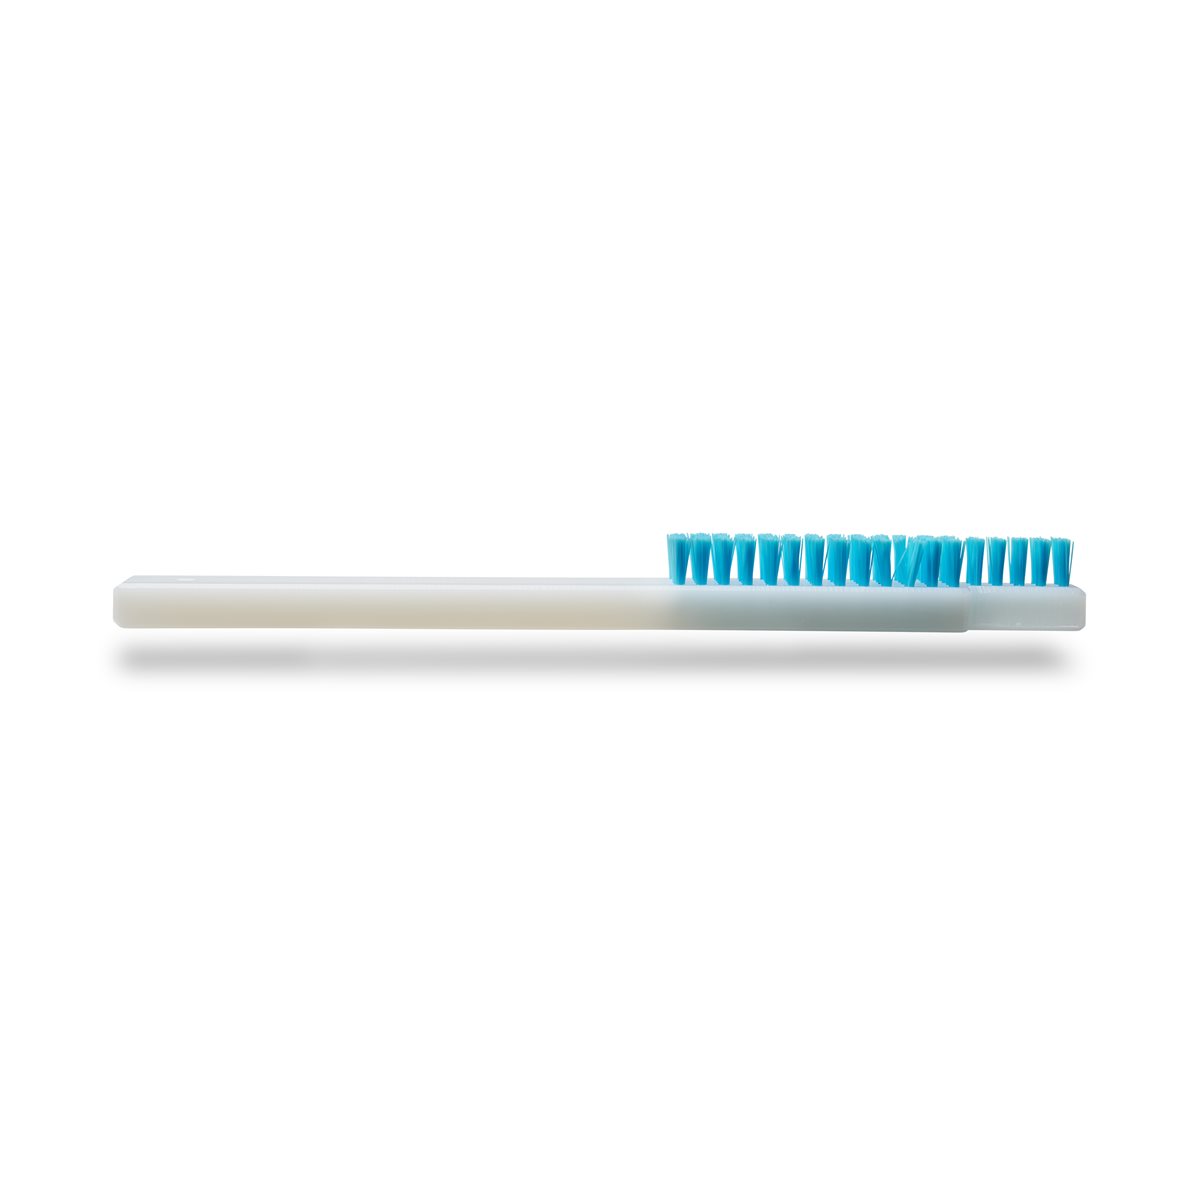 Key Surgical Toothbrush-Style Cleaning Nylon Brushes